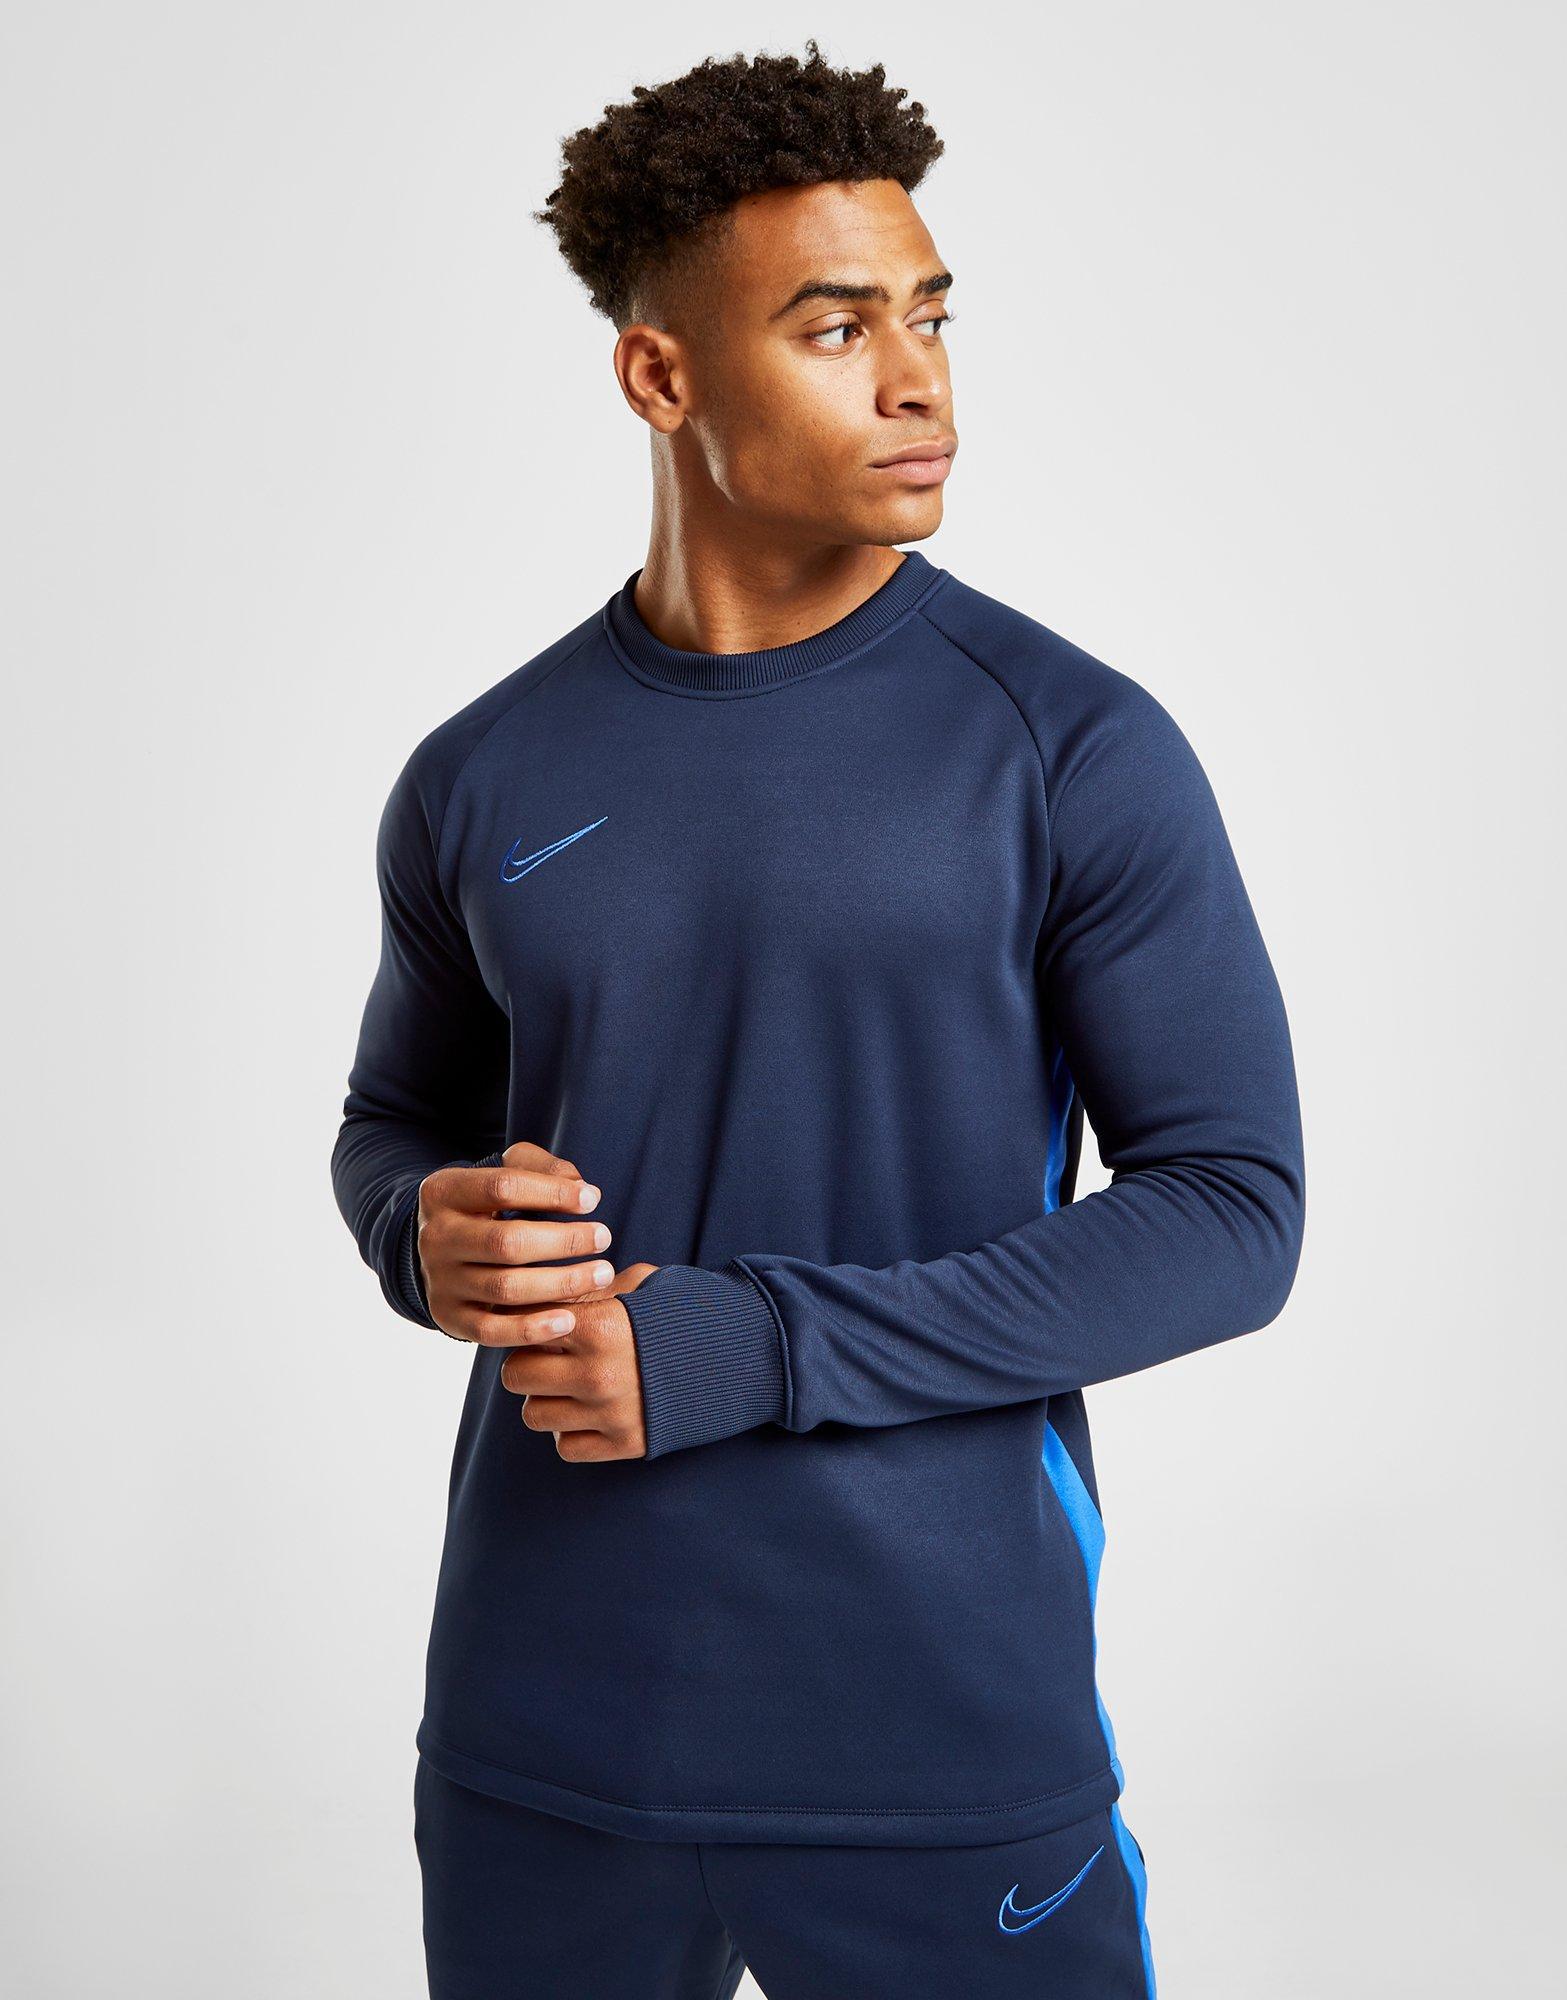 Nike Academy Therma Crew Sweatshirt, Buy Now, Shop, 57% OFF,  sportsregras.com